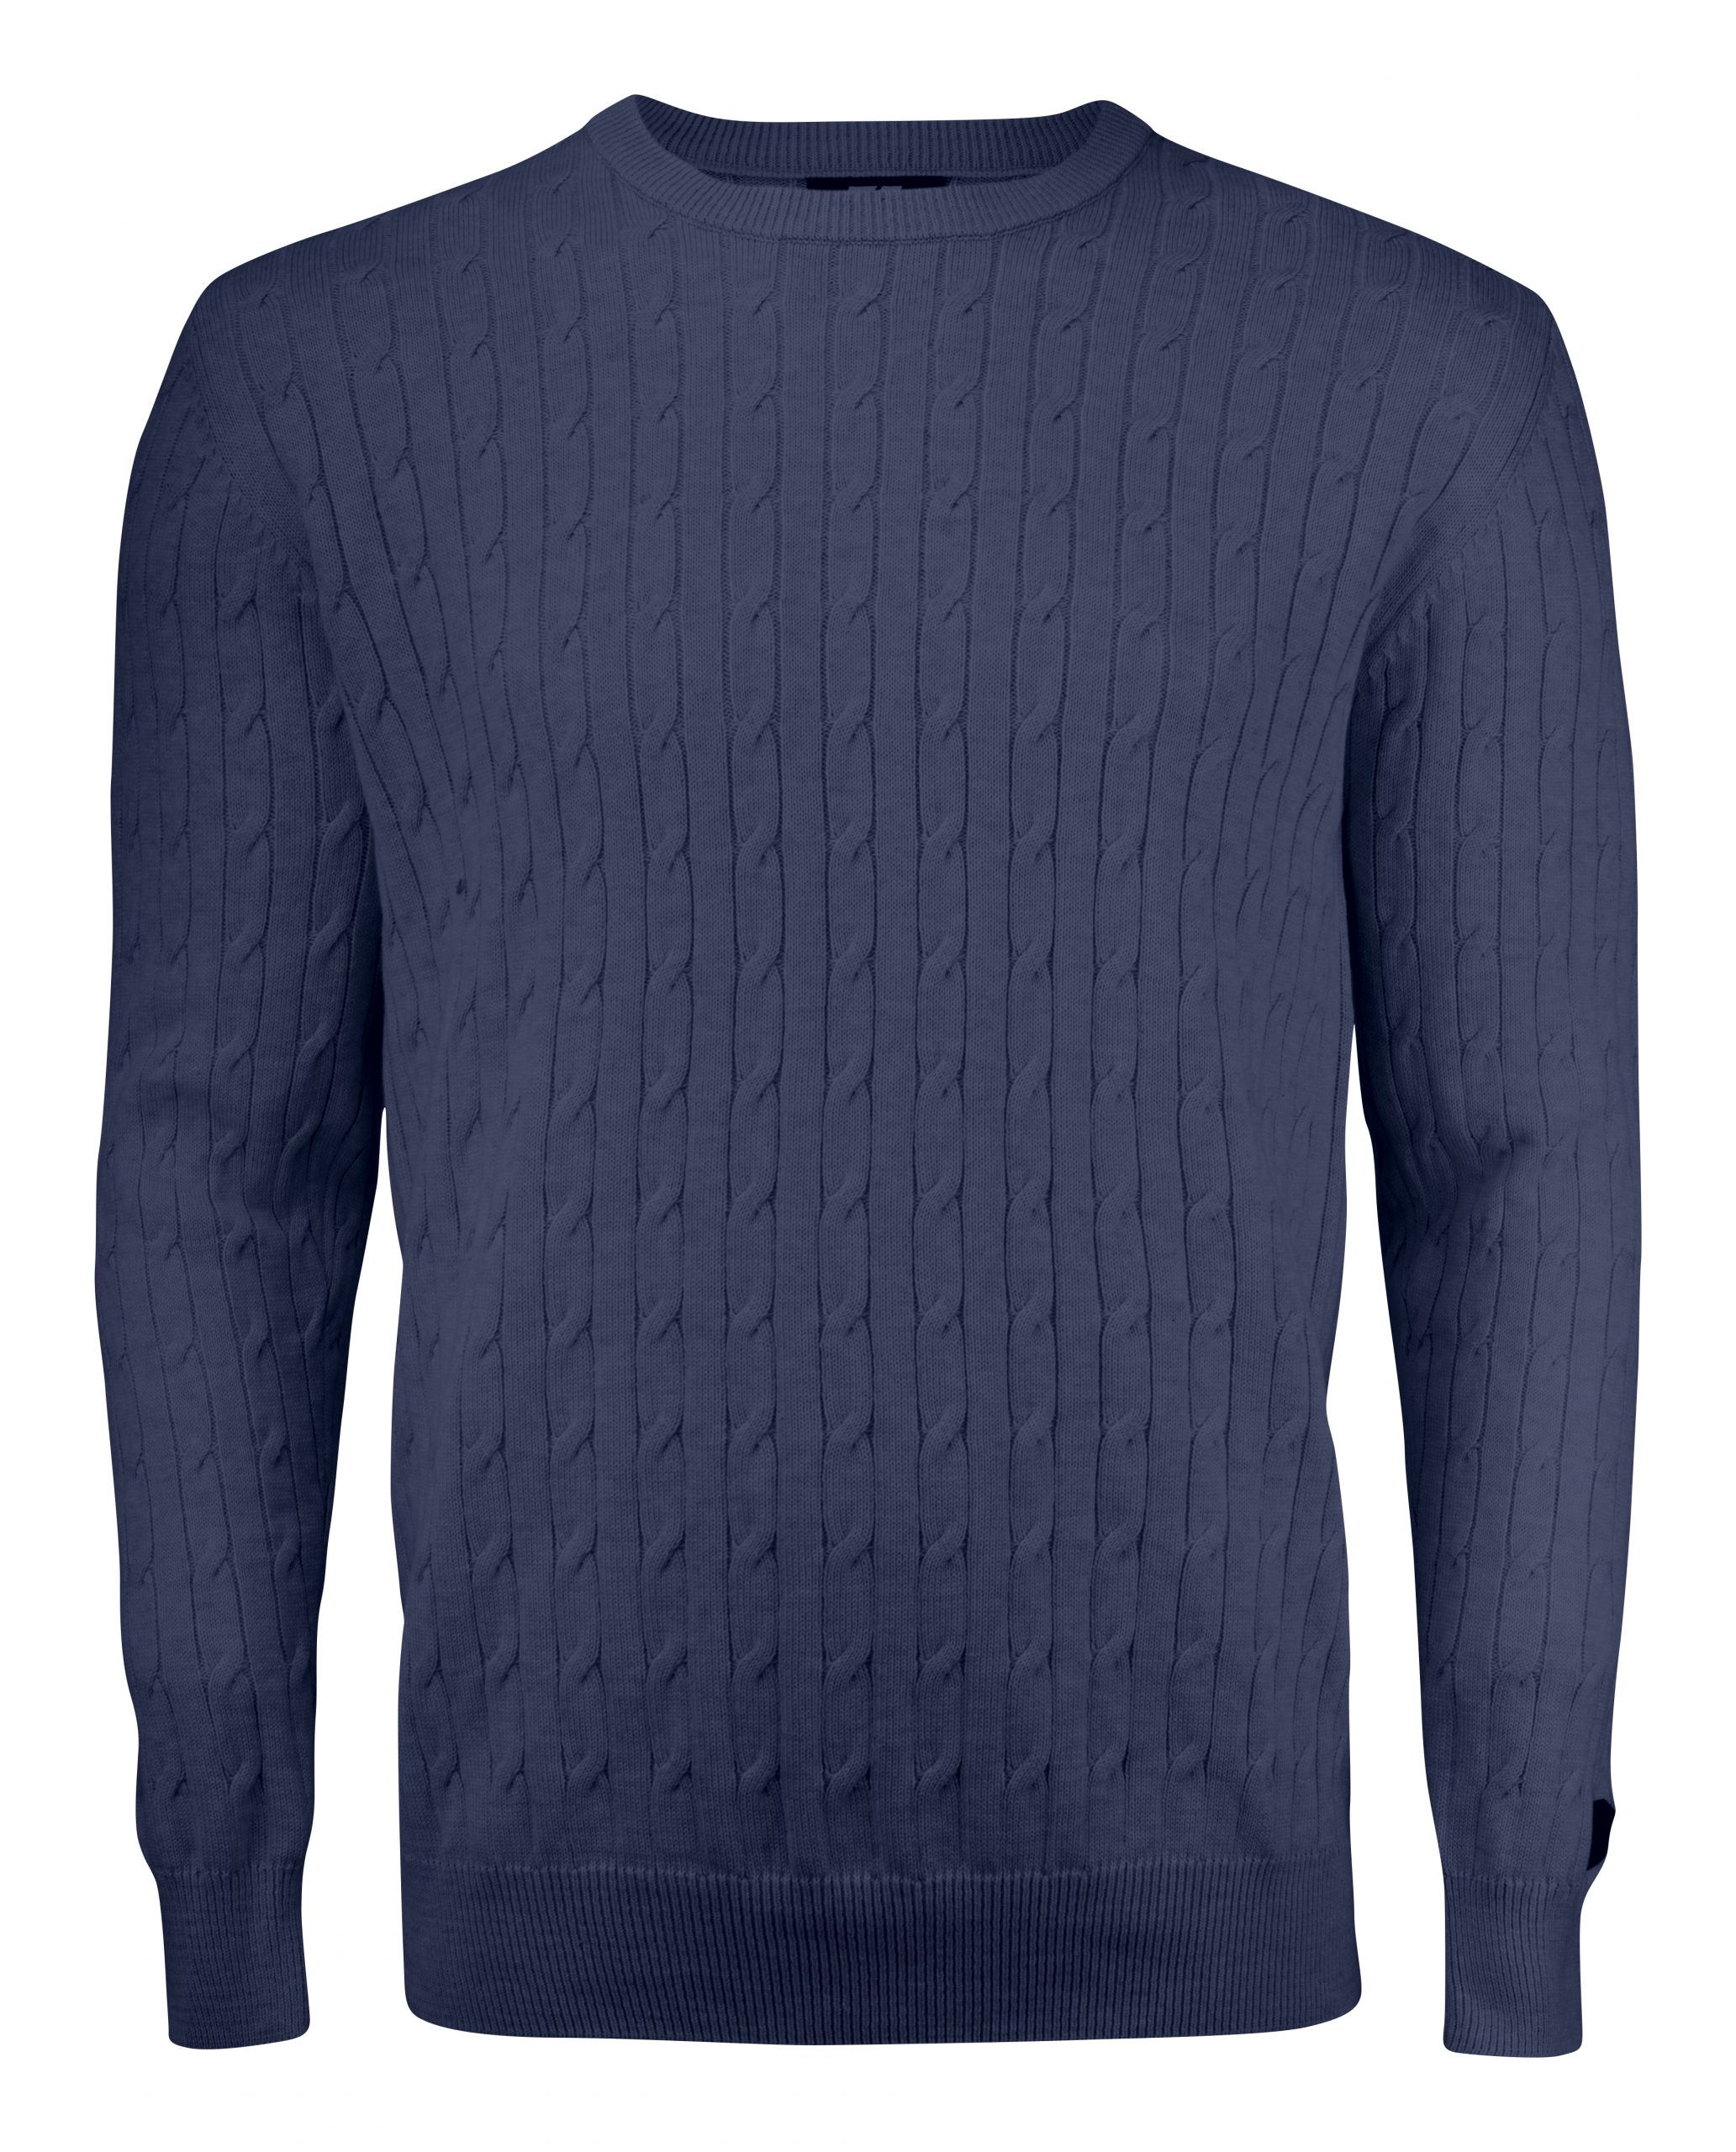 Cutterandbuck Blakely Knitted Sweater Men's Navy Melange